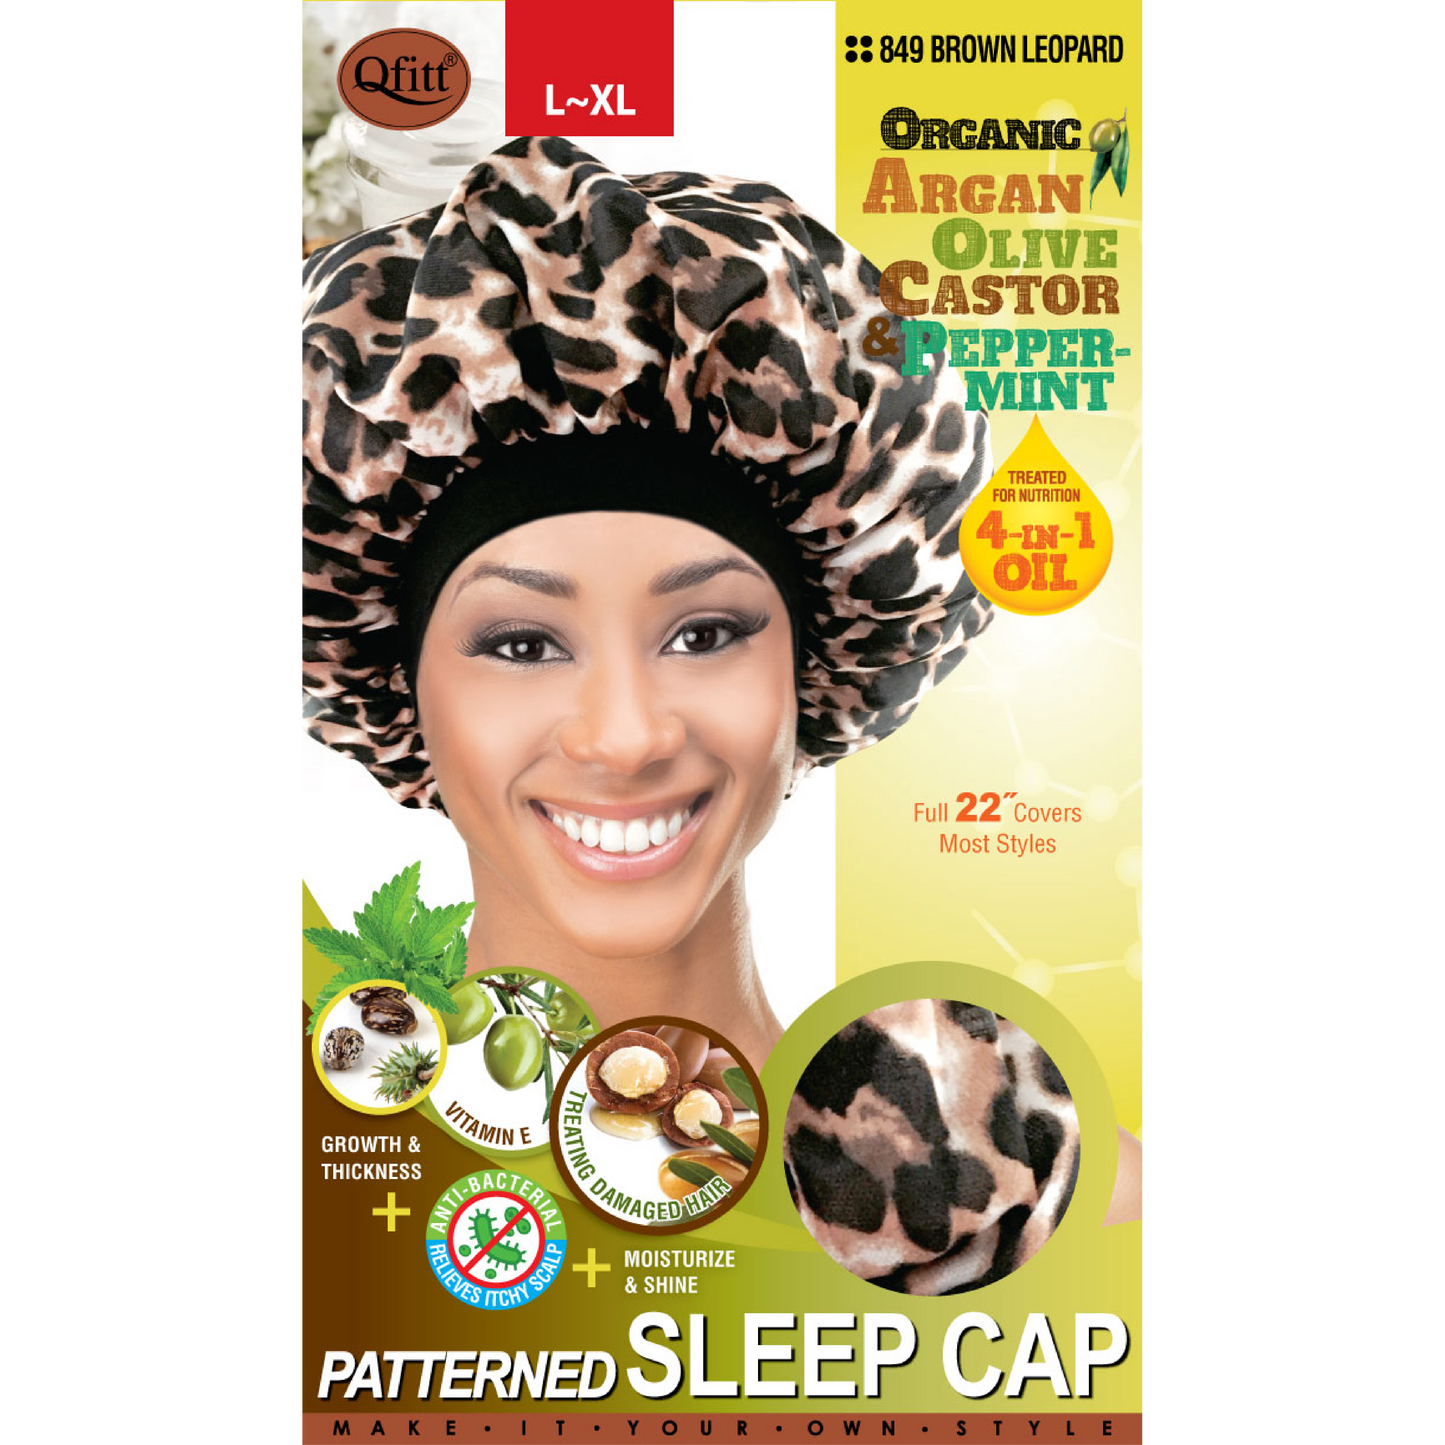 ORGANIC PATTERNED SLEEP CAP